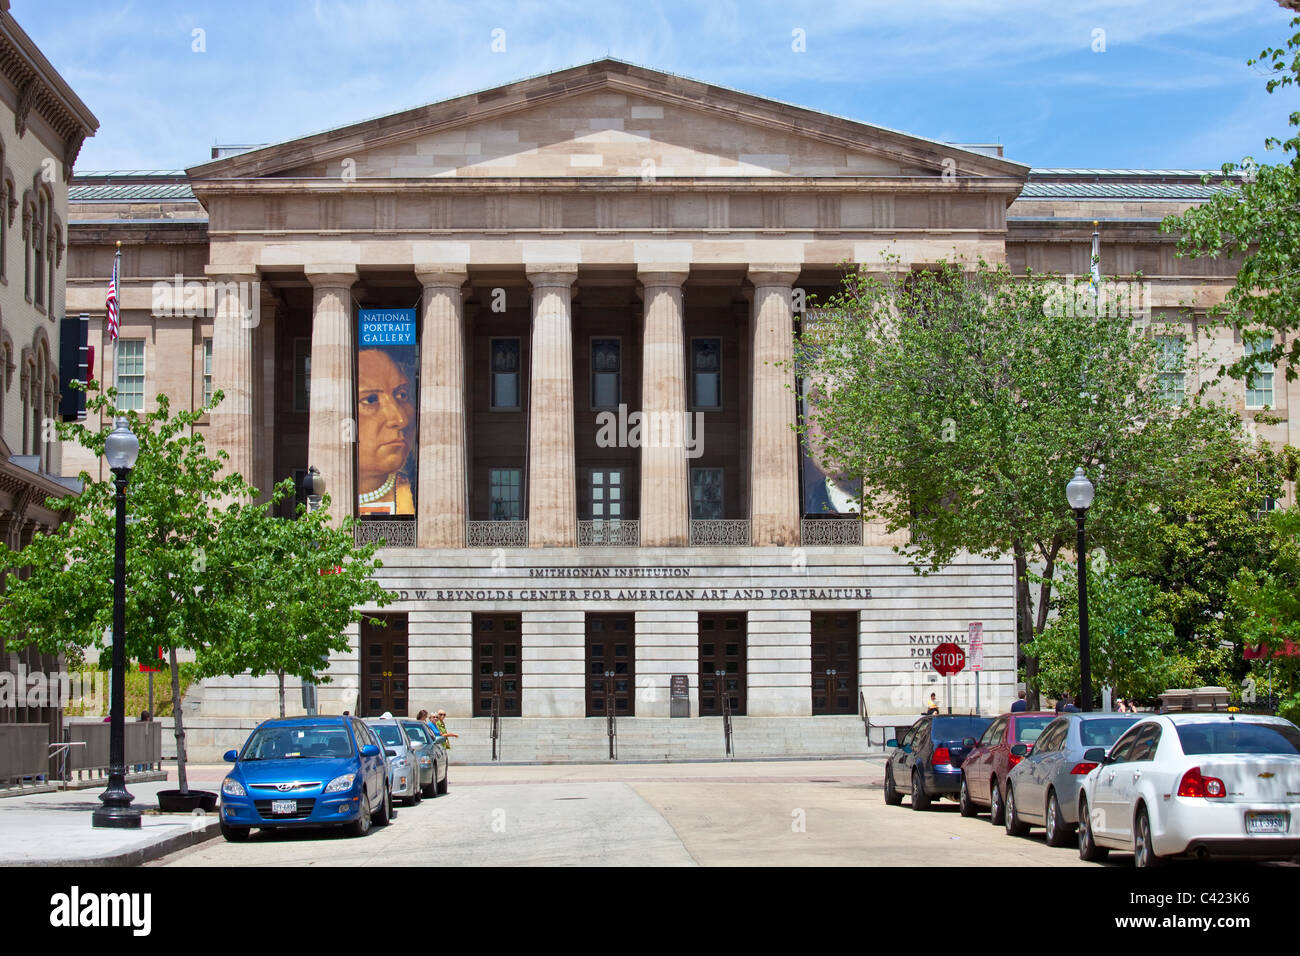 Smithsonian Institution, National Portrait Gallery, Washington DC Stock Photo